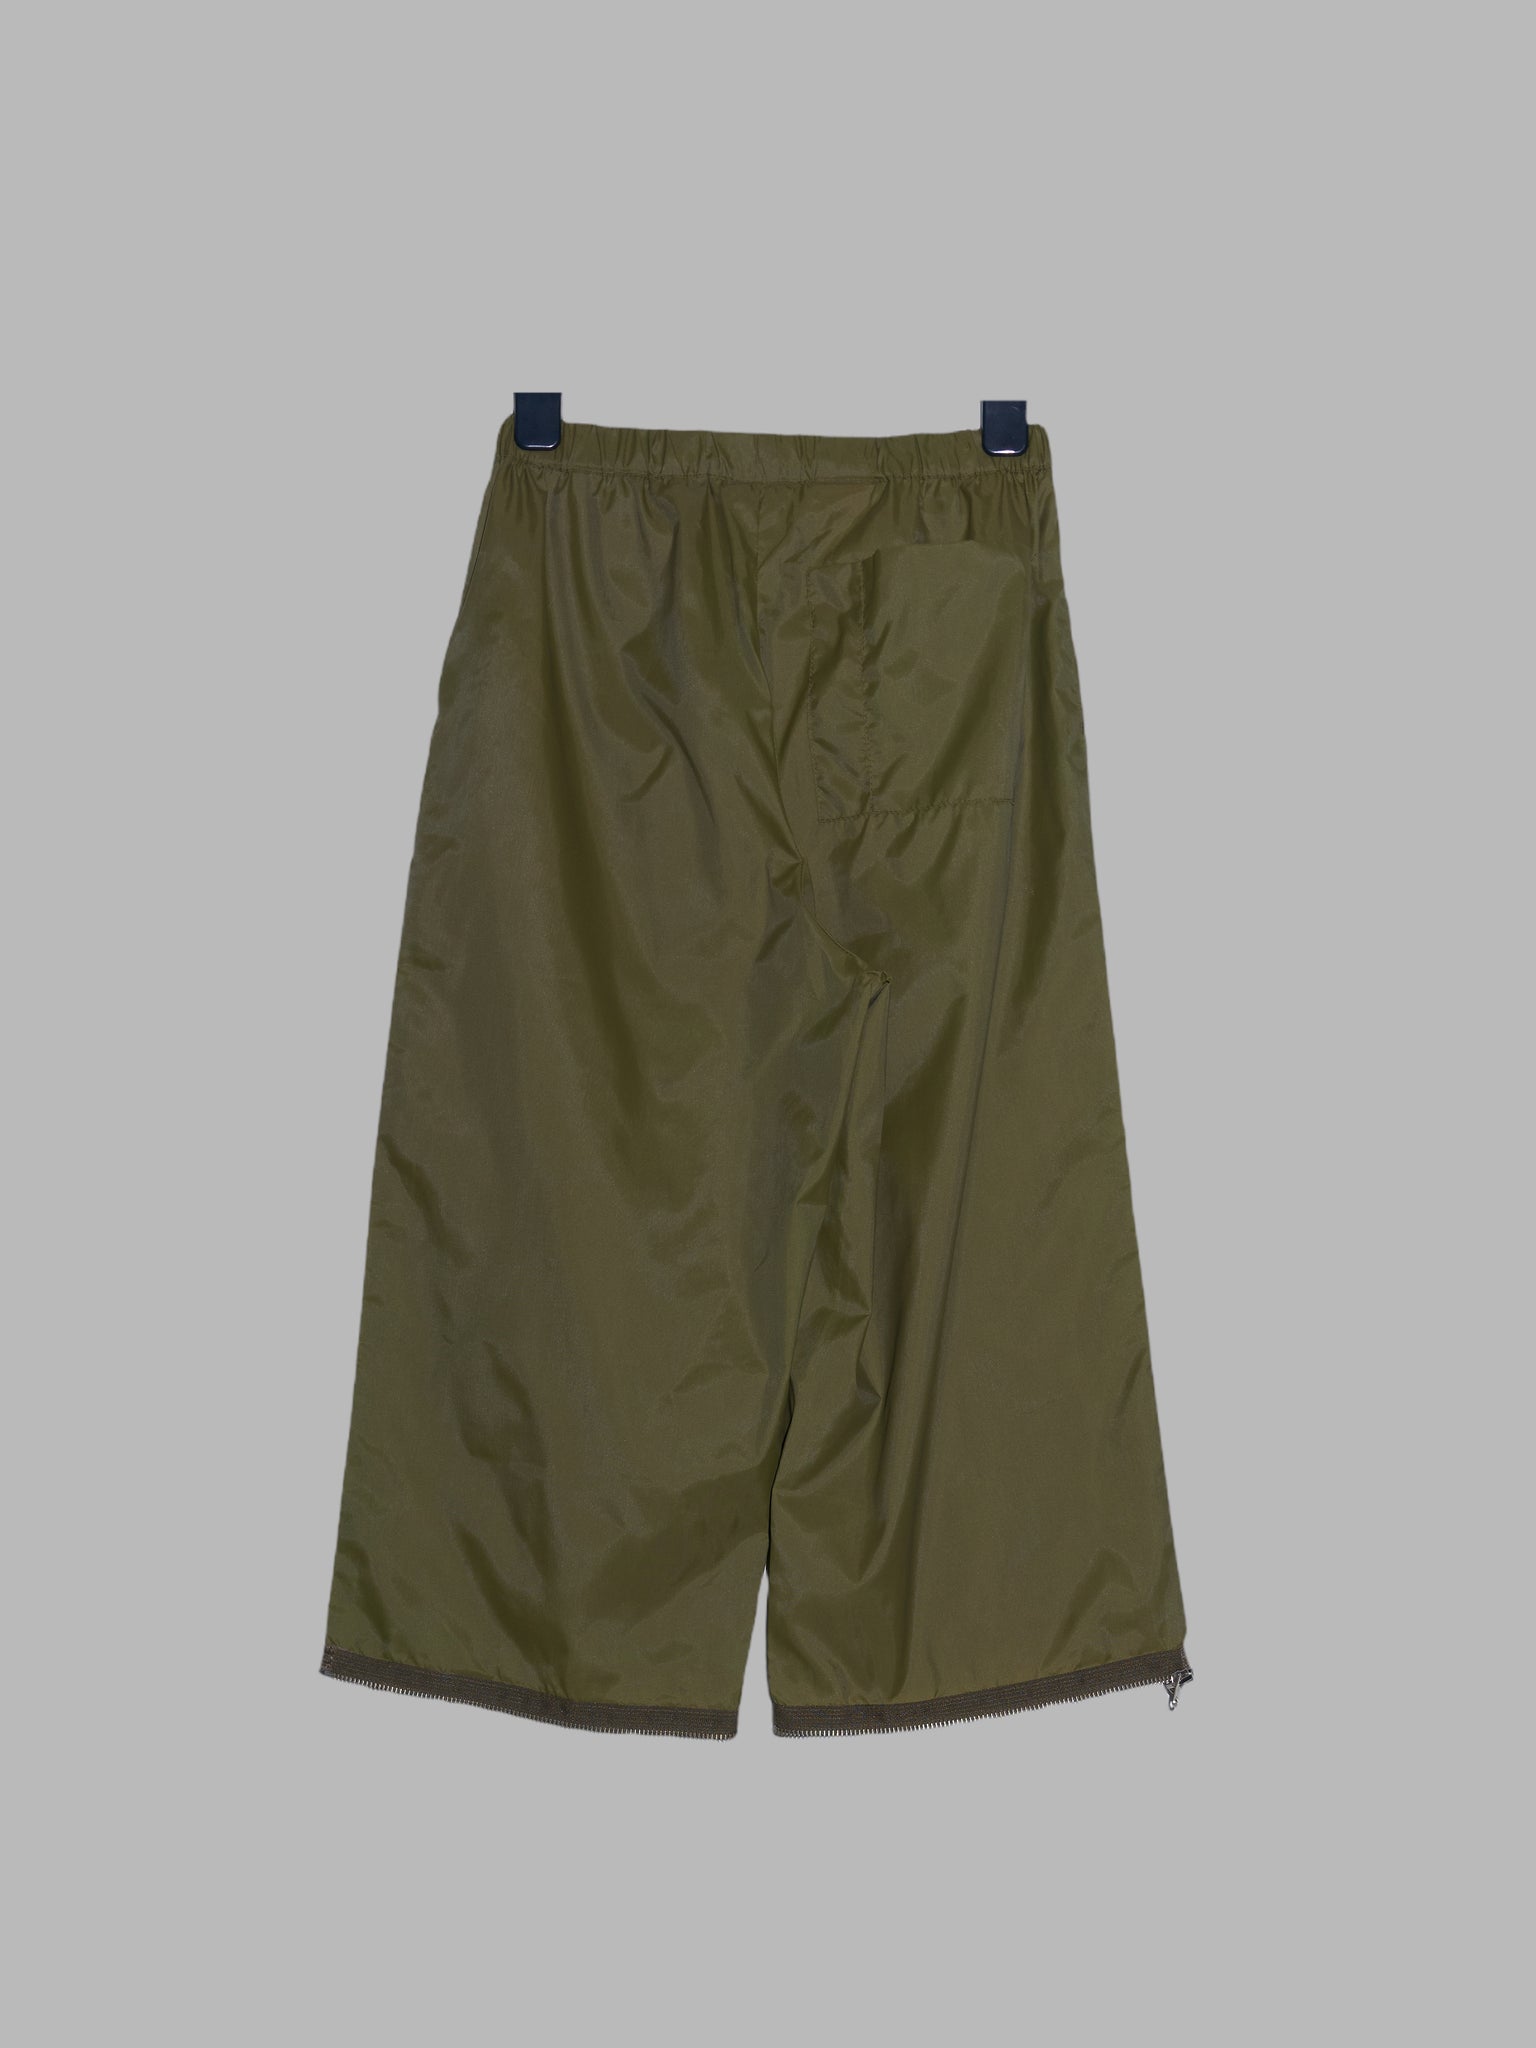 Jean Colonna khaki nylon zip-off leg trousers or shorts - size 44